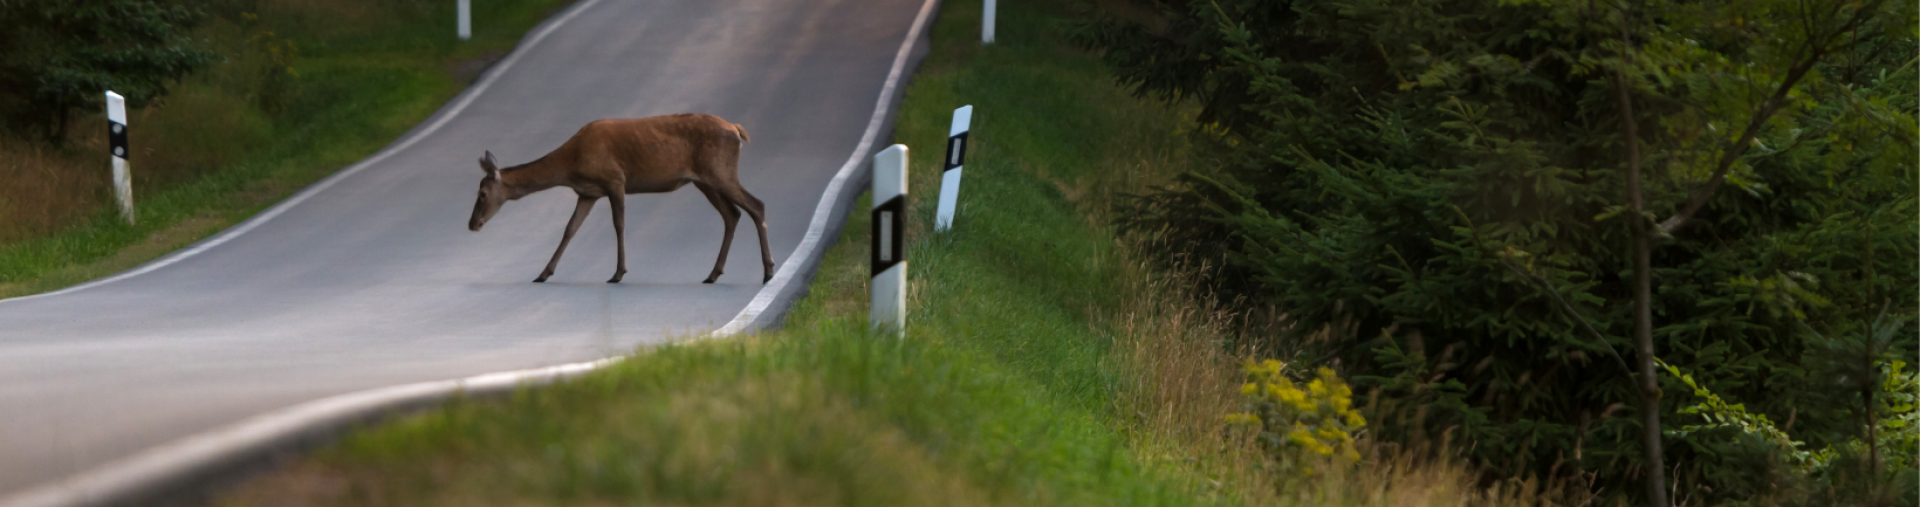 Wildlife on county roads.